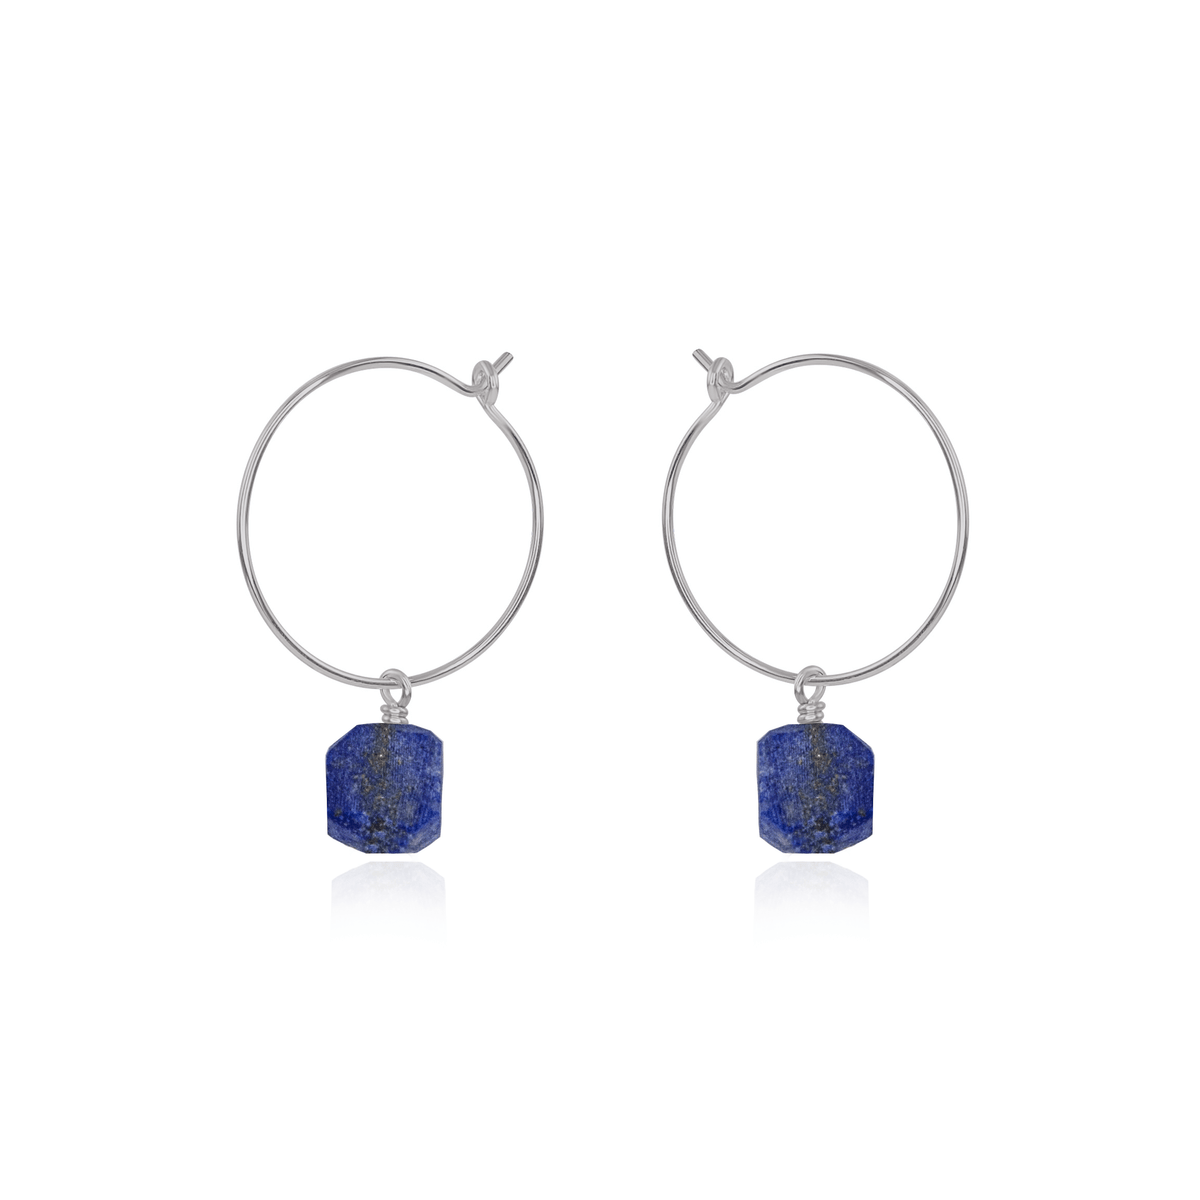 Raw Lapis Lazuli Gemstone Dangle Hoop Earrings - Raw Lapis Lazuli Gemstone Dangle Hoop Earrings - Stainless Steel - Luna Tide Handmade Crystal Jewellery